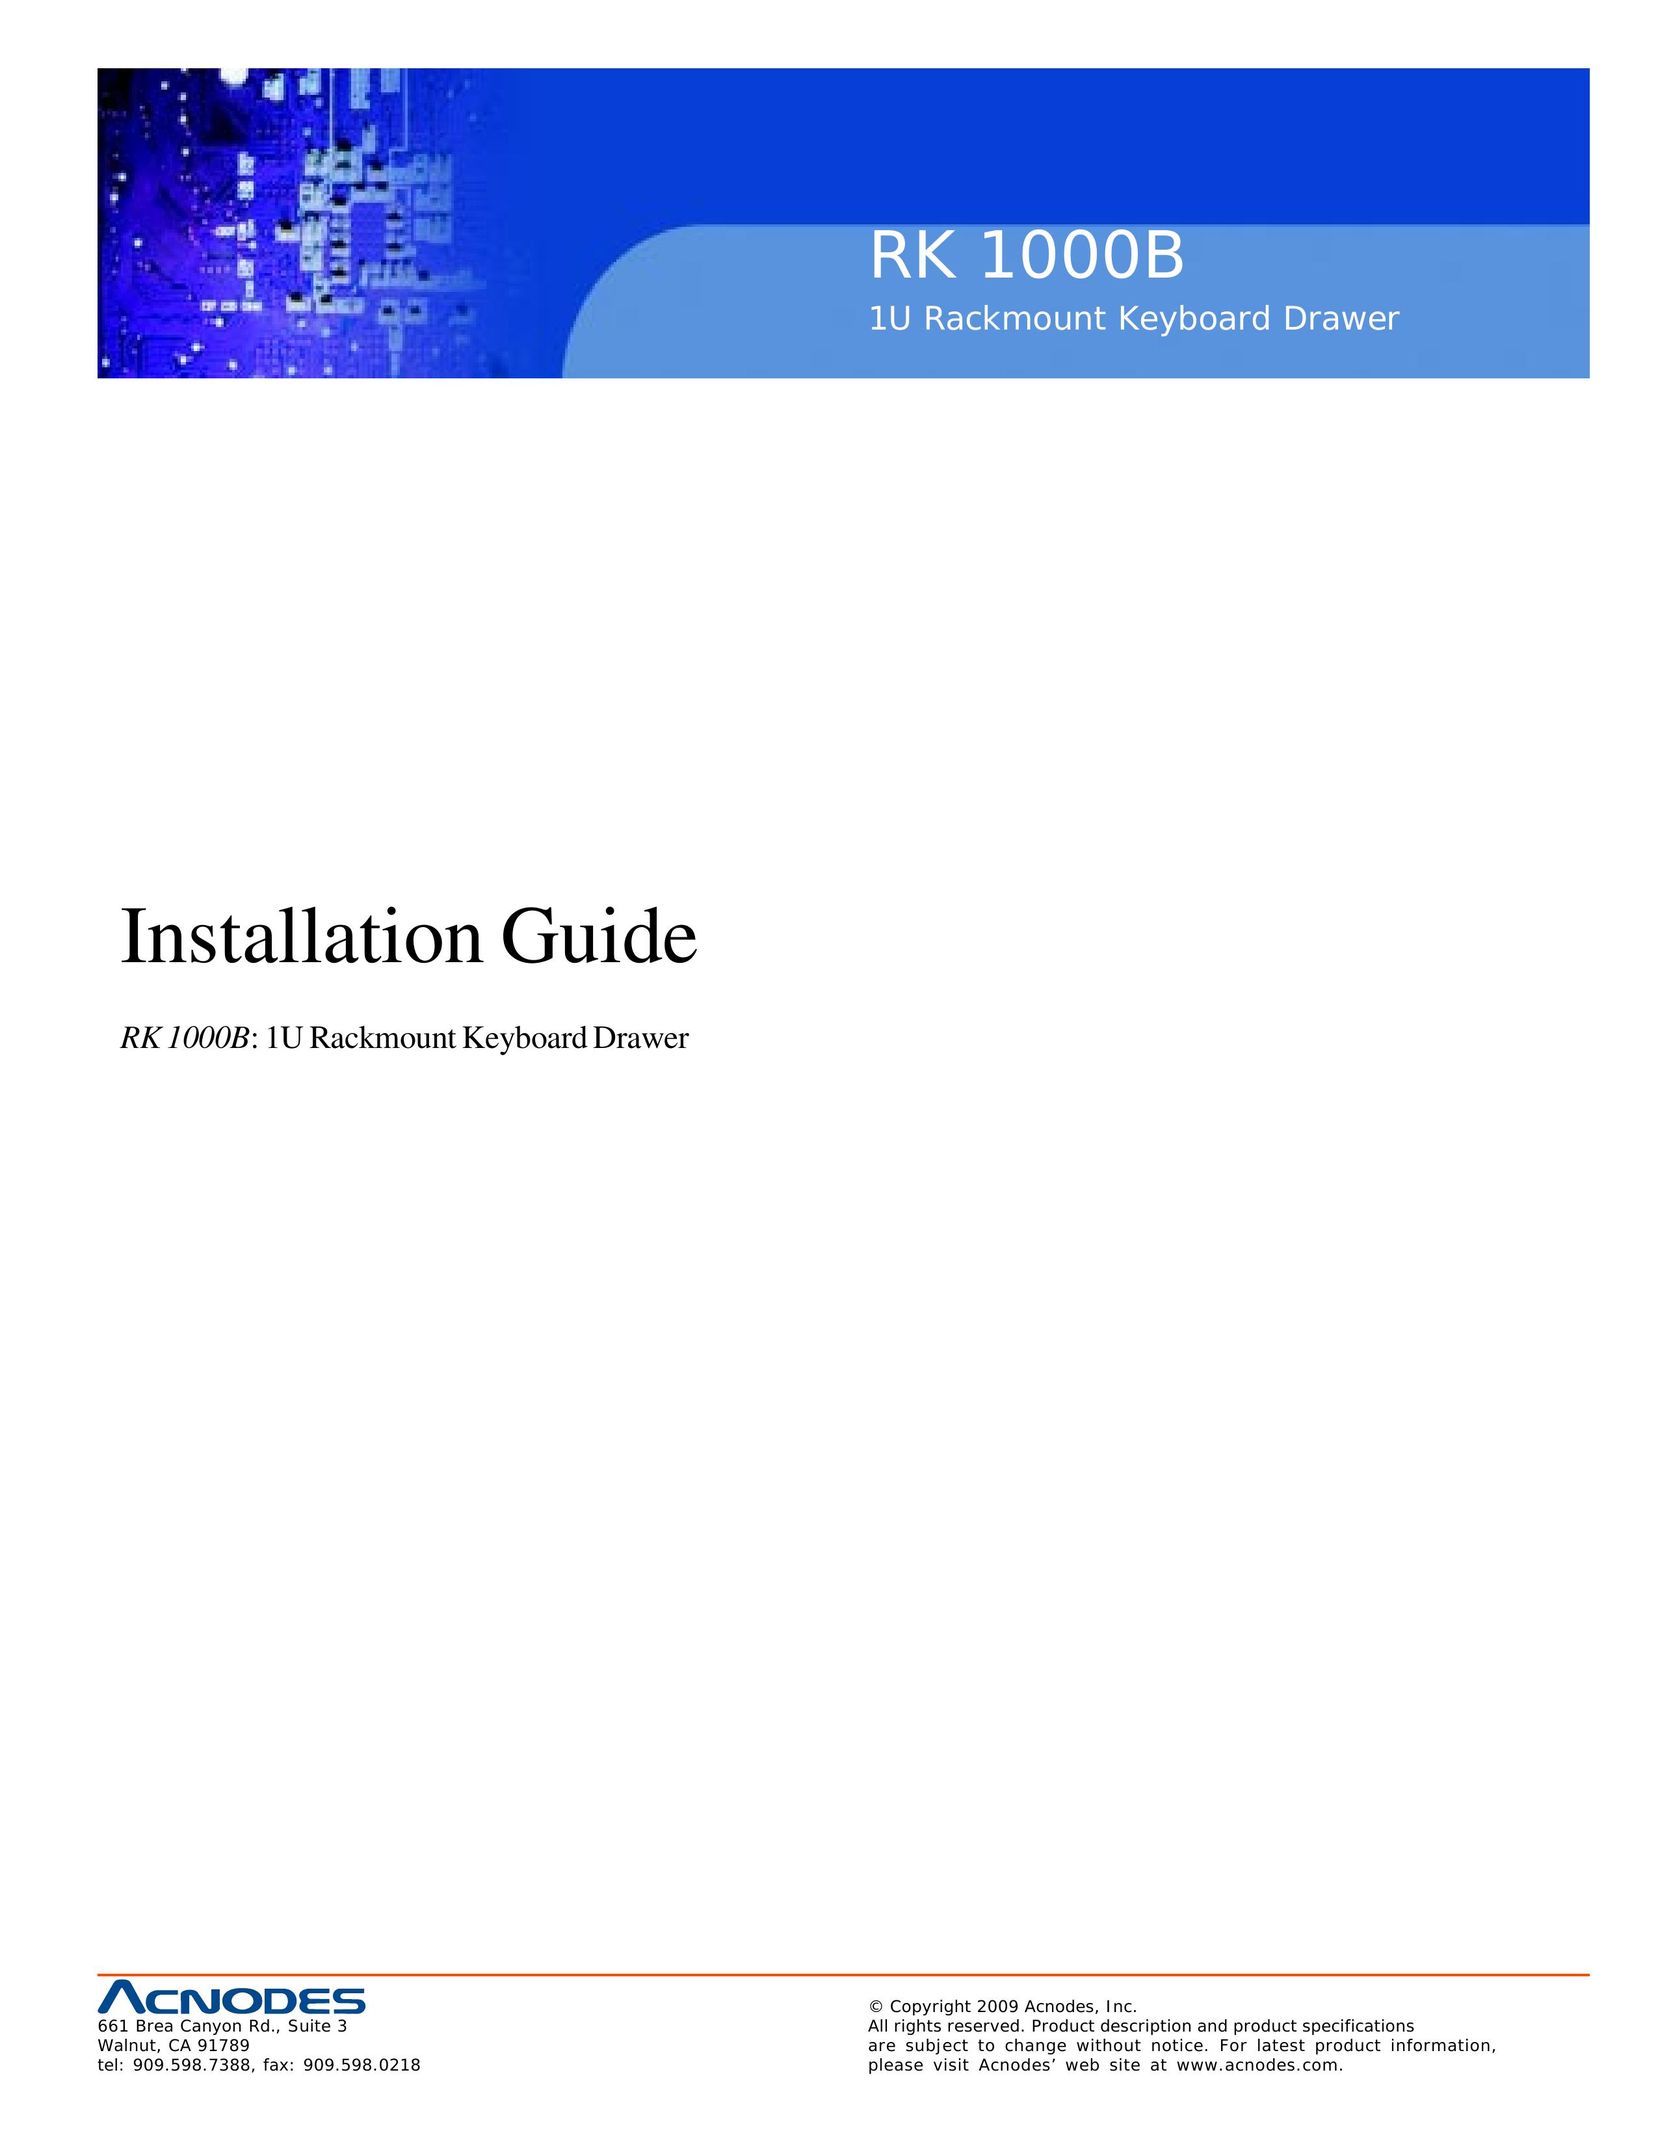 Acnodes RK 1000B Computer Hardware User Manual